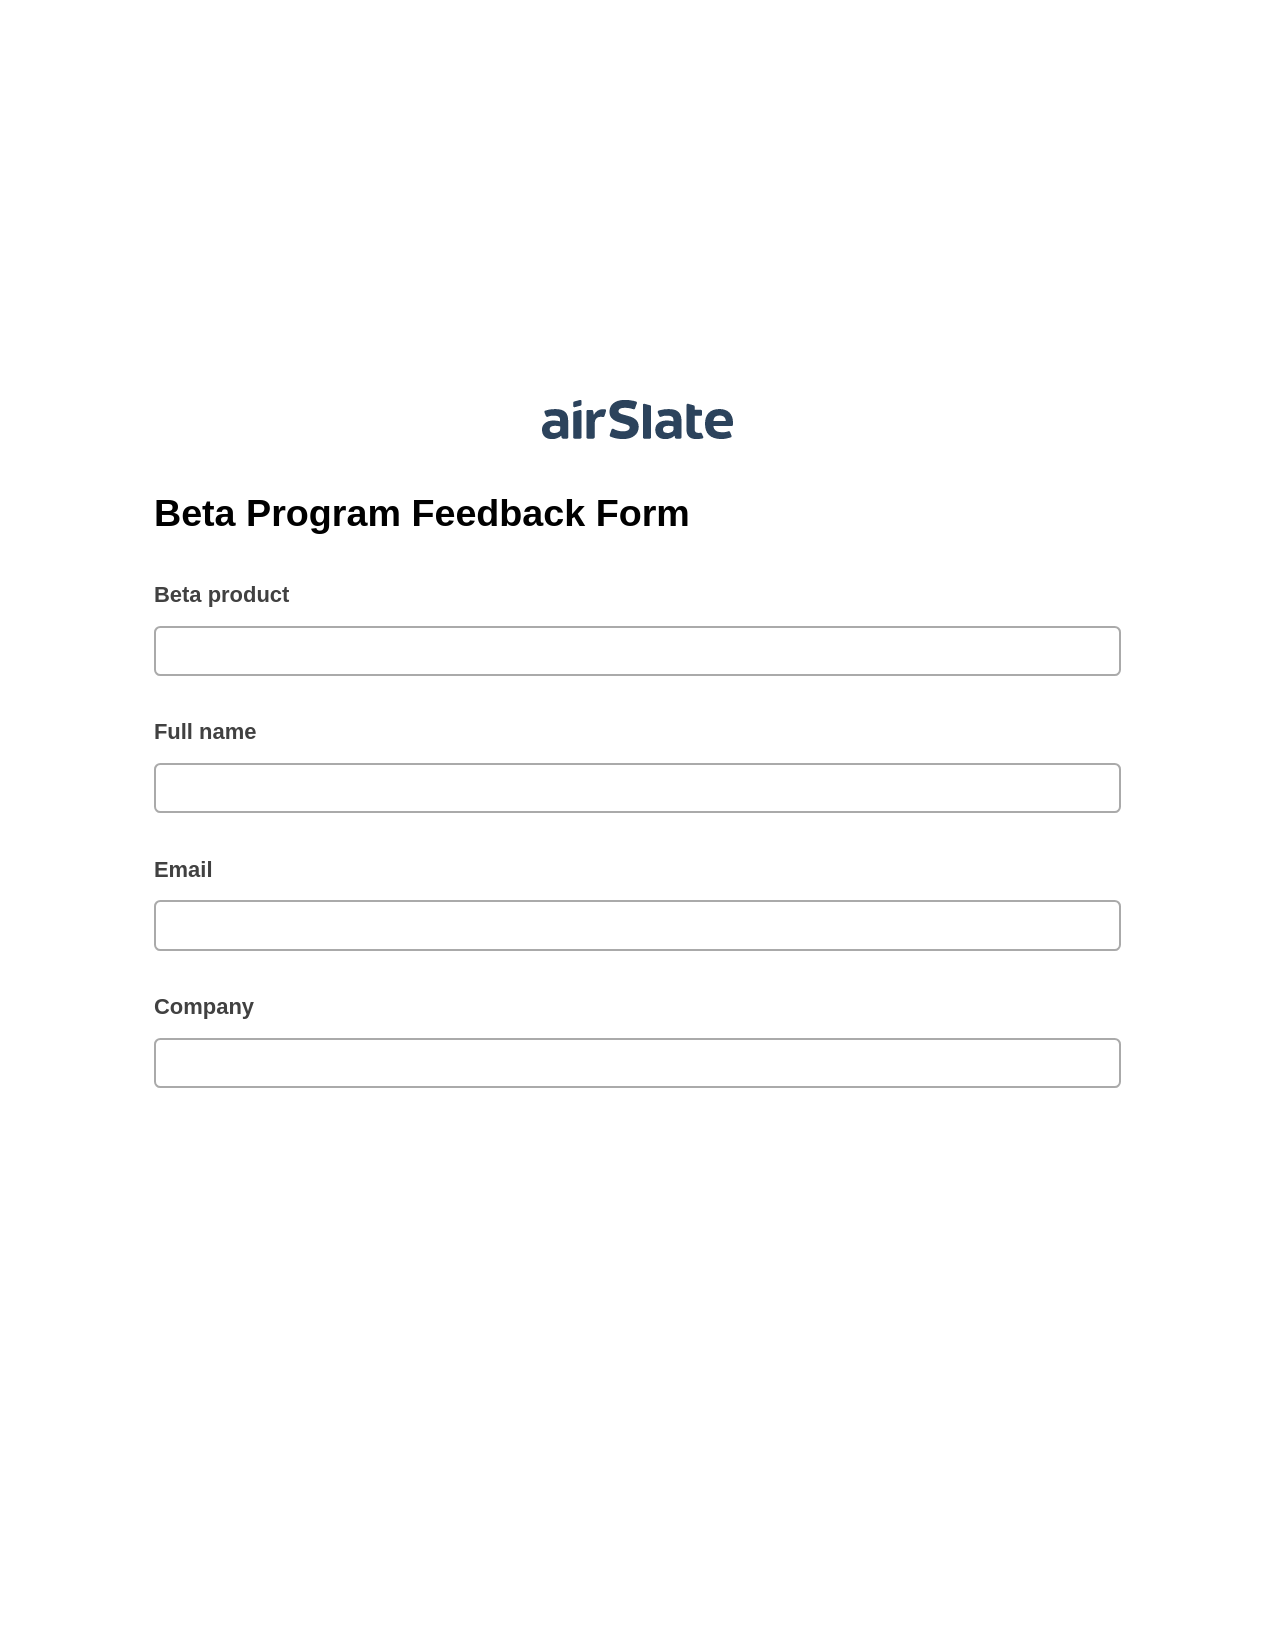 Beta Program Feedback Form Pre-fill Dropdowns from Excel Bot, Webhook Bot, Export to Smartsheet